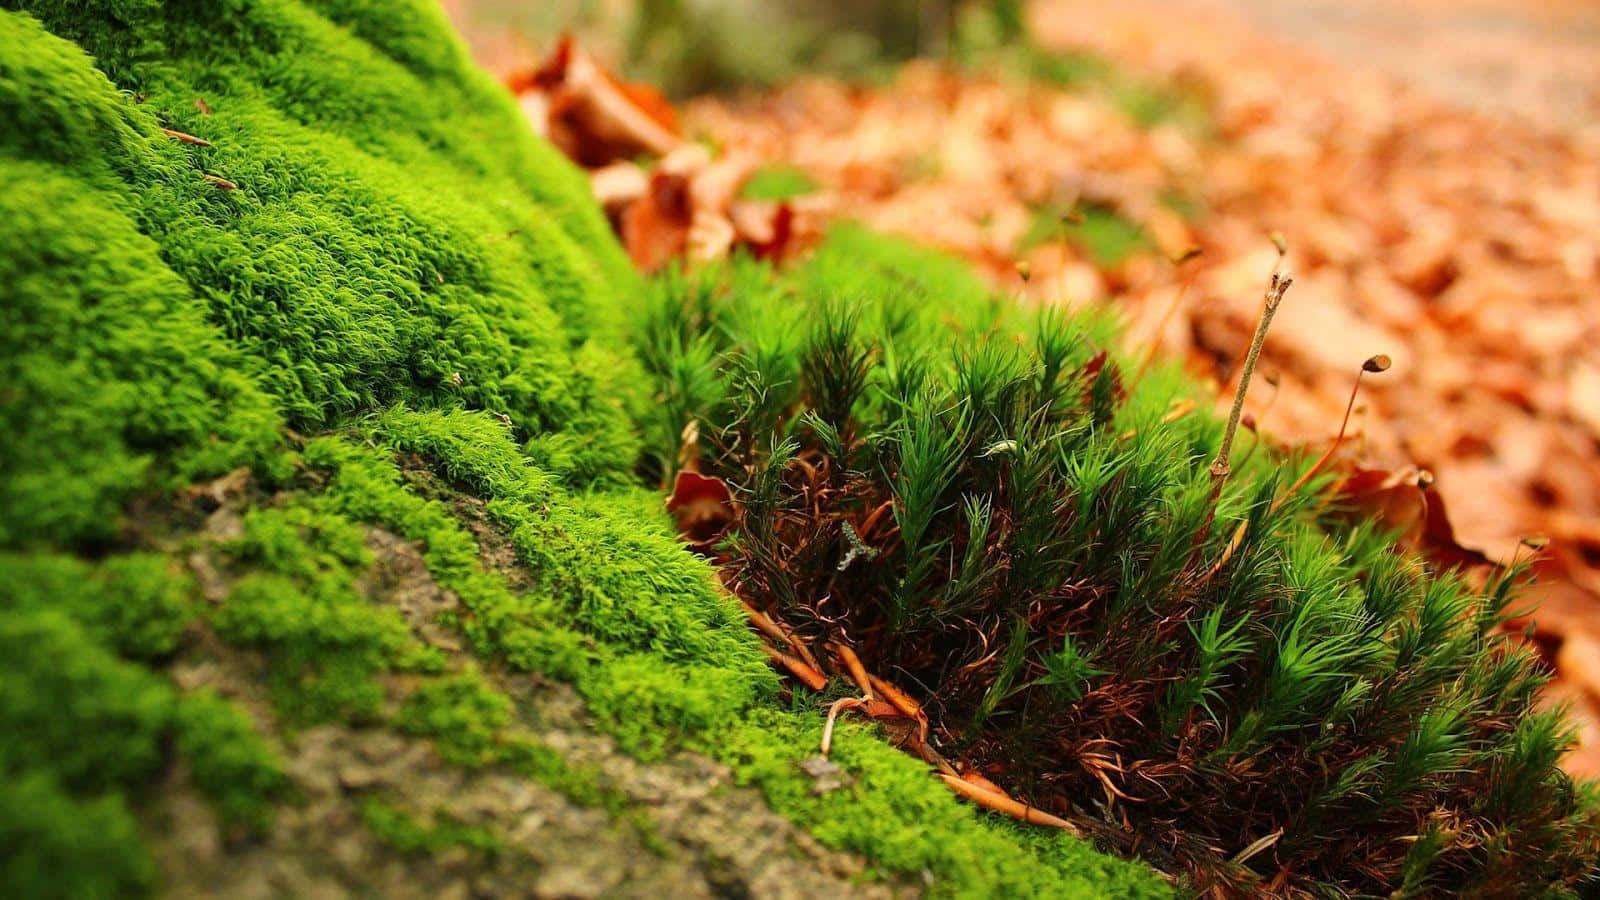 Moss On A Tree Stump